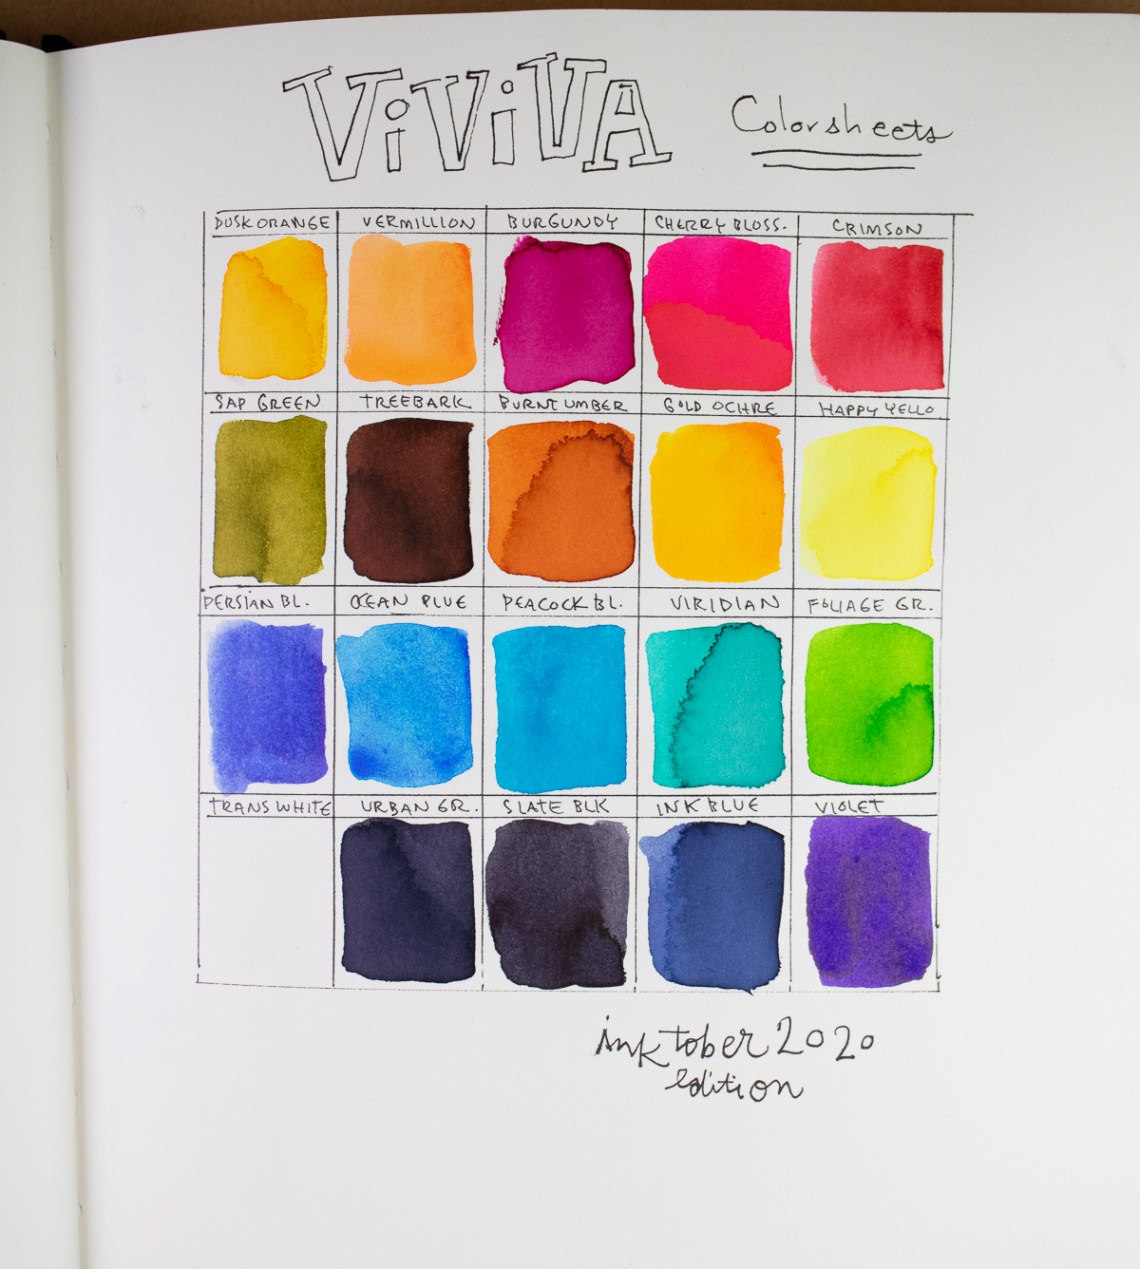 Viviva Colorsheets Inktober Edition